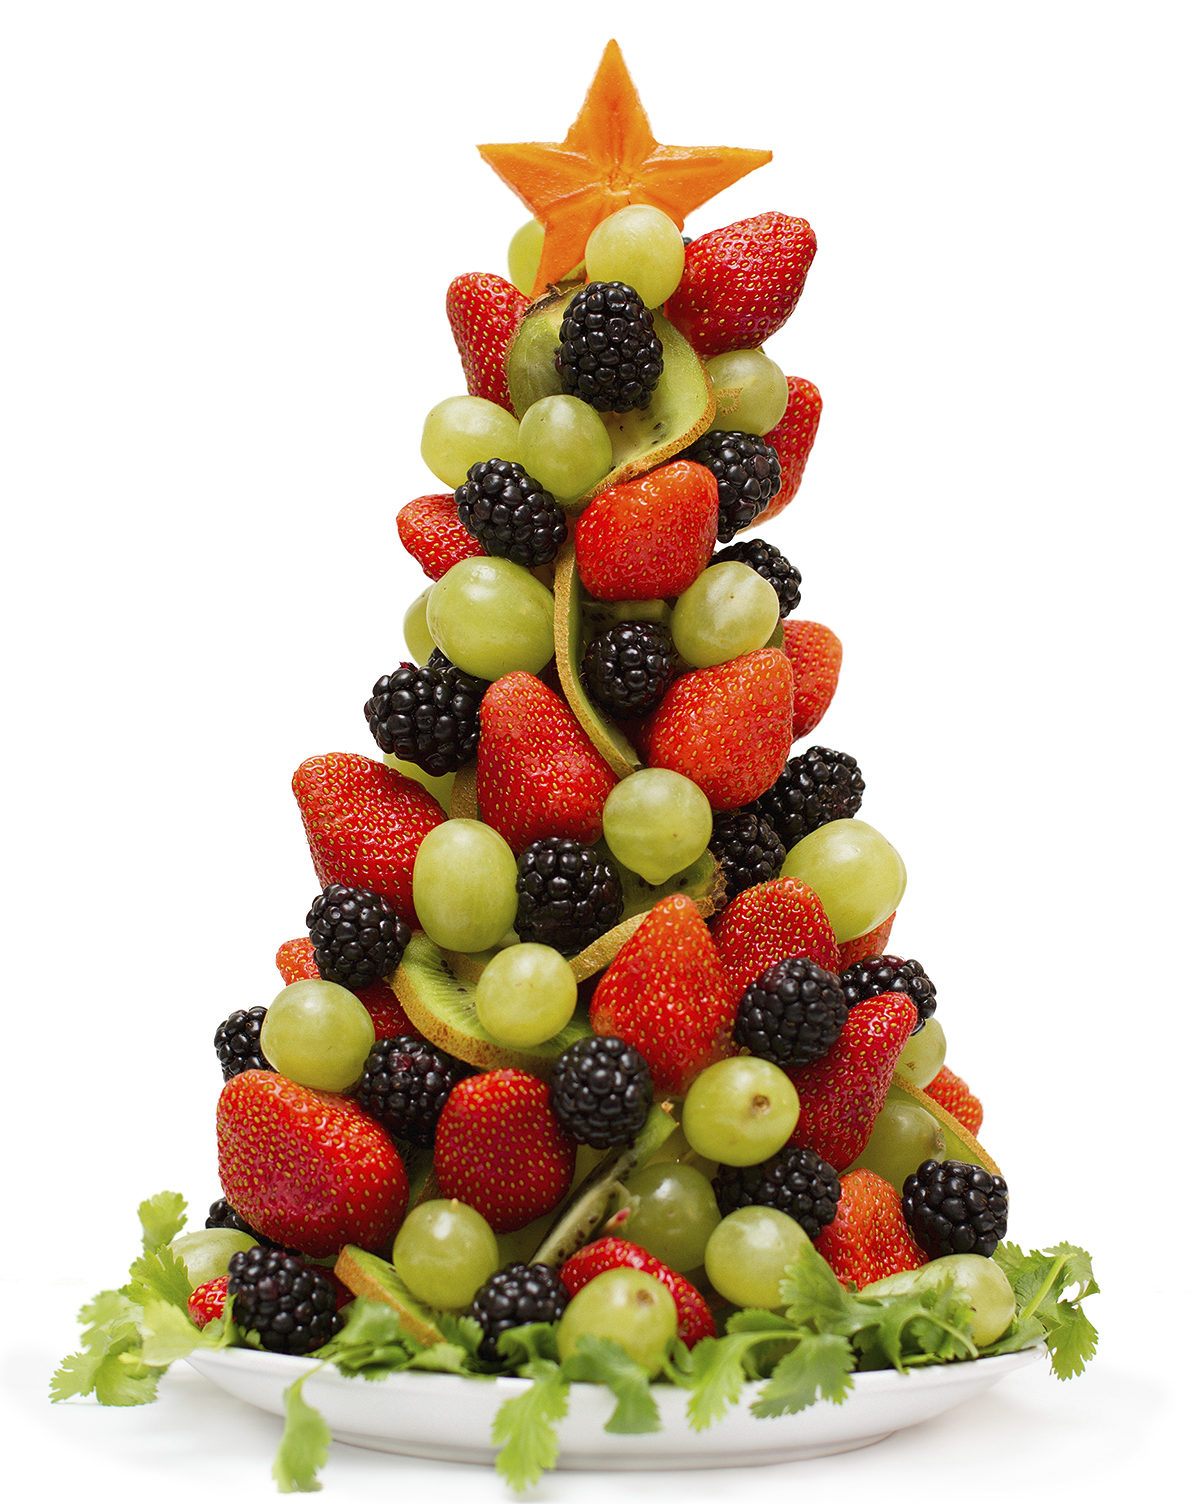 Make your own Fruit Christmas Tree!